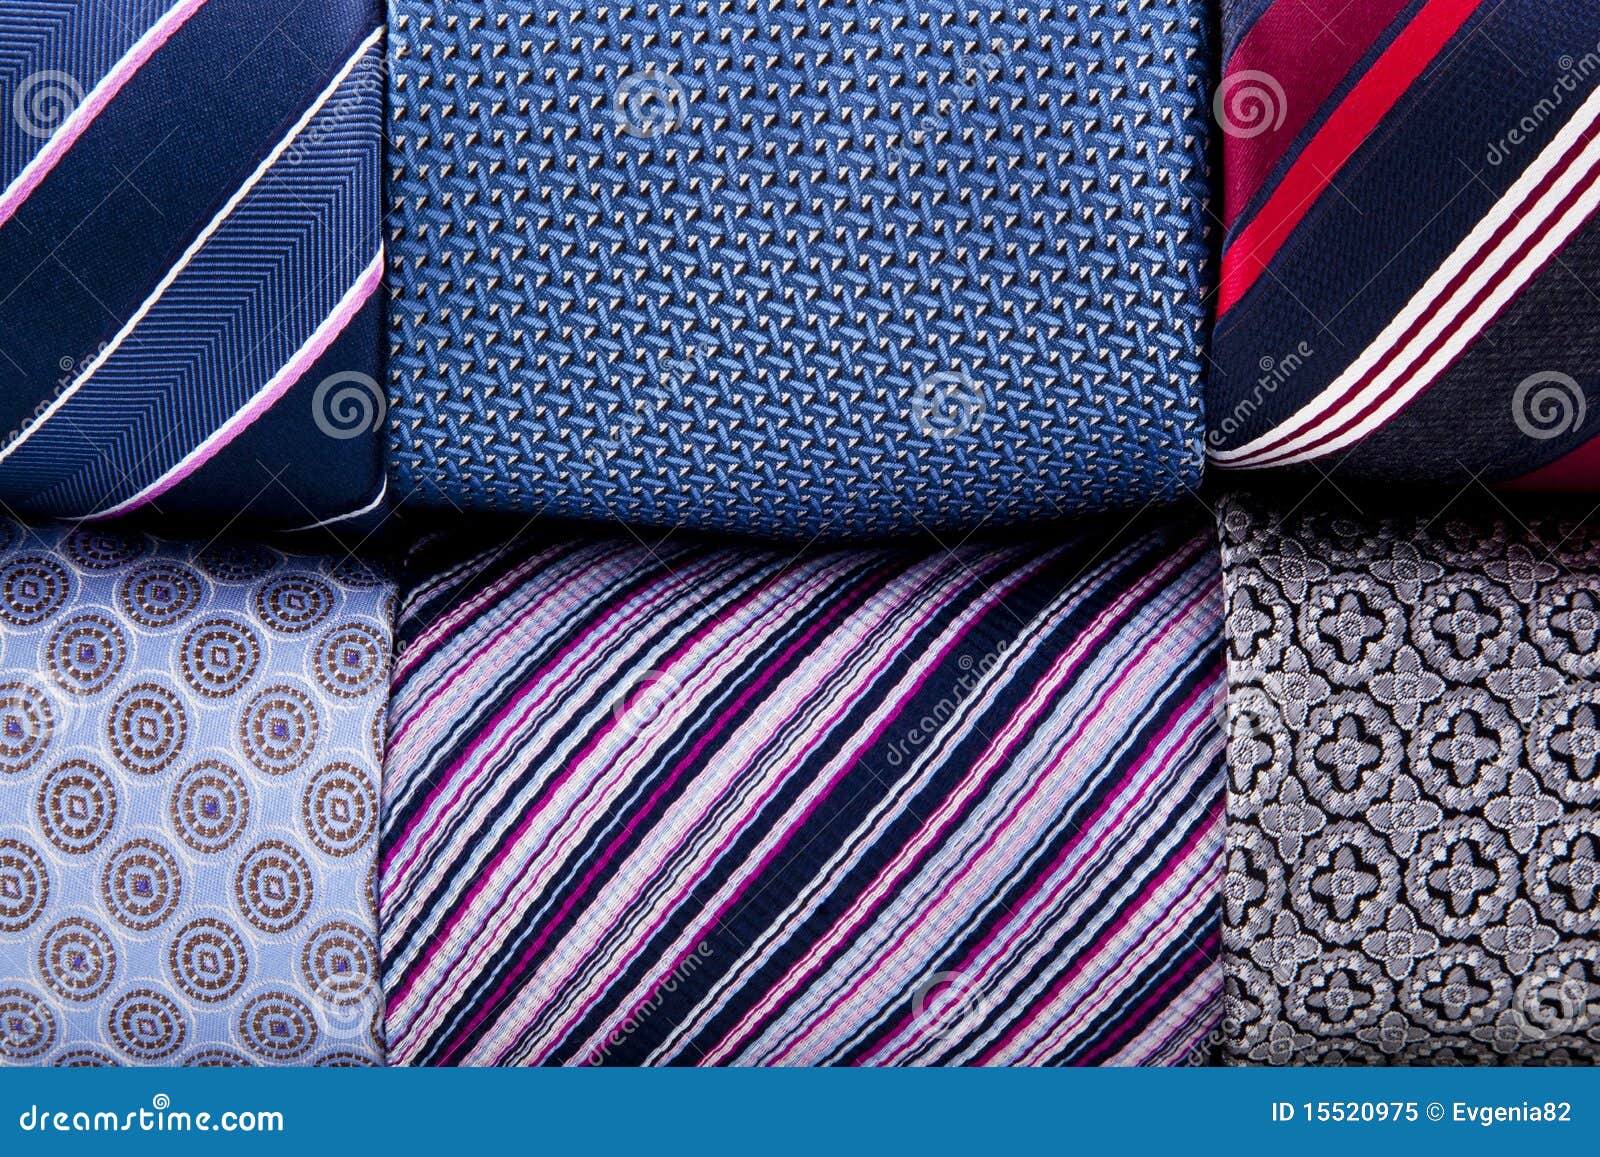 Tie background stock image. Image of pattern, designer - 15520975